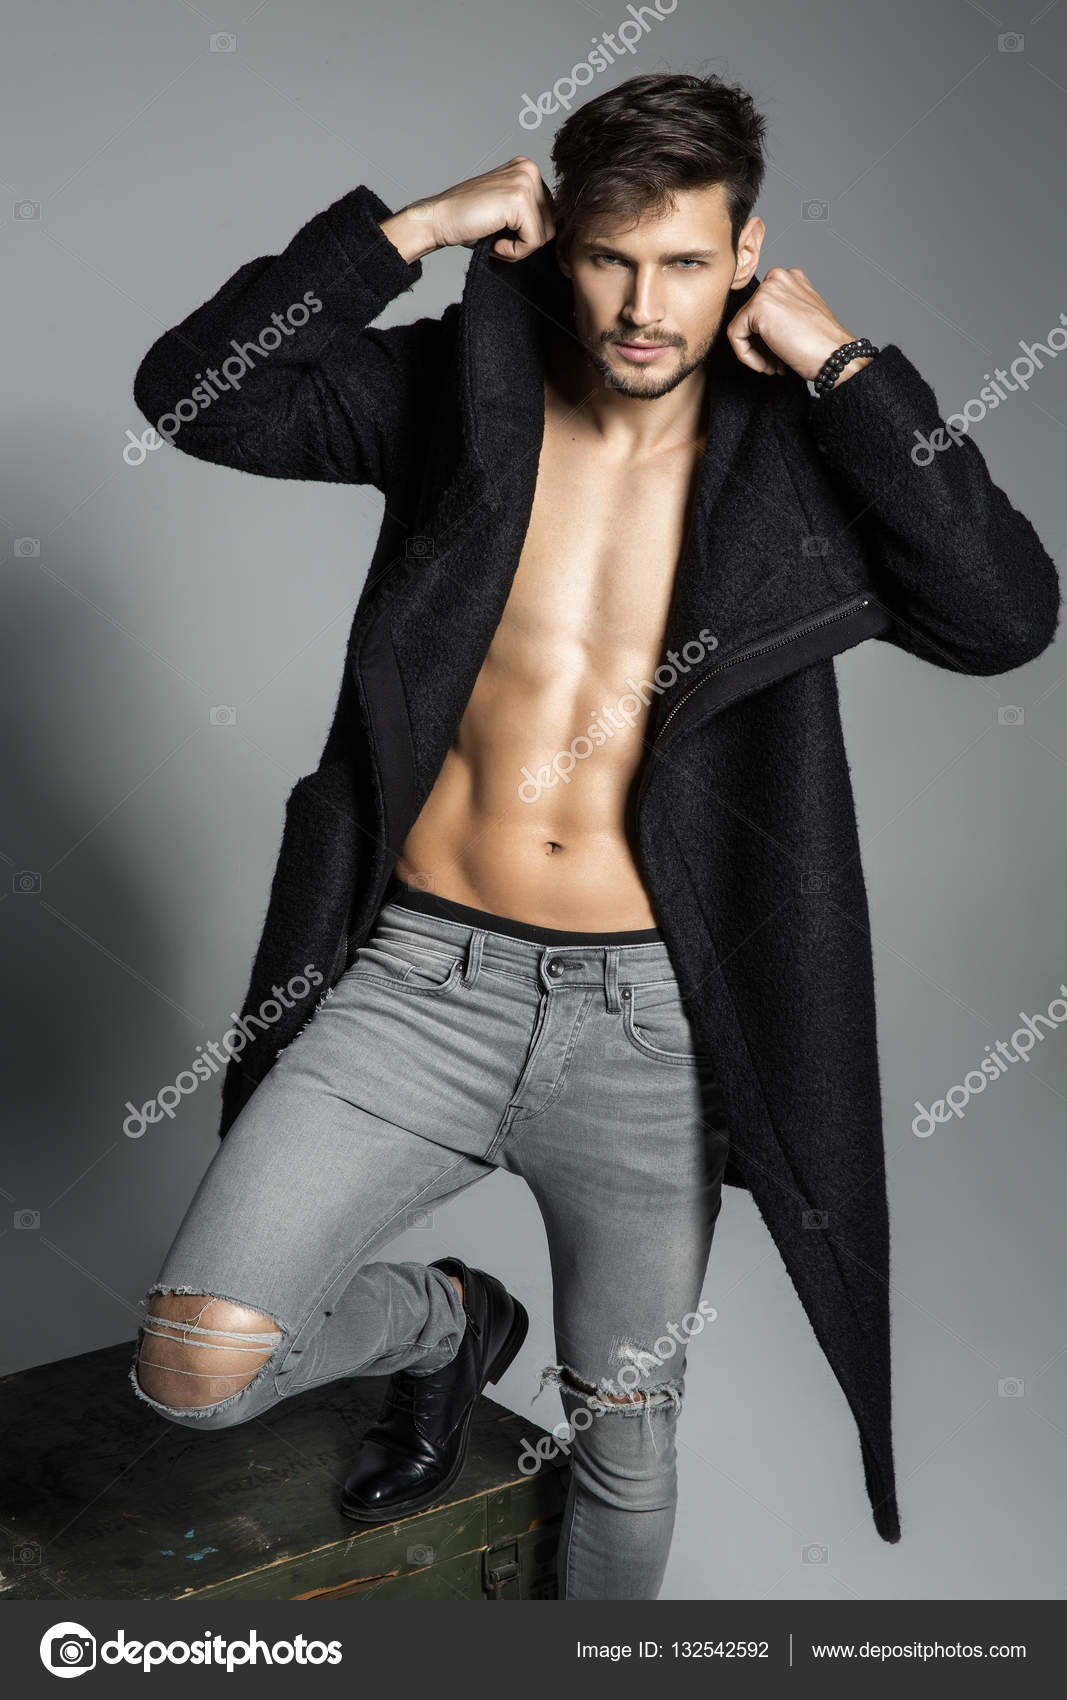 Male Model poses | Male models poses, Model poses, Pakistani street style